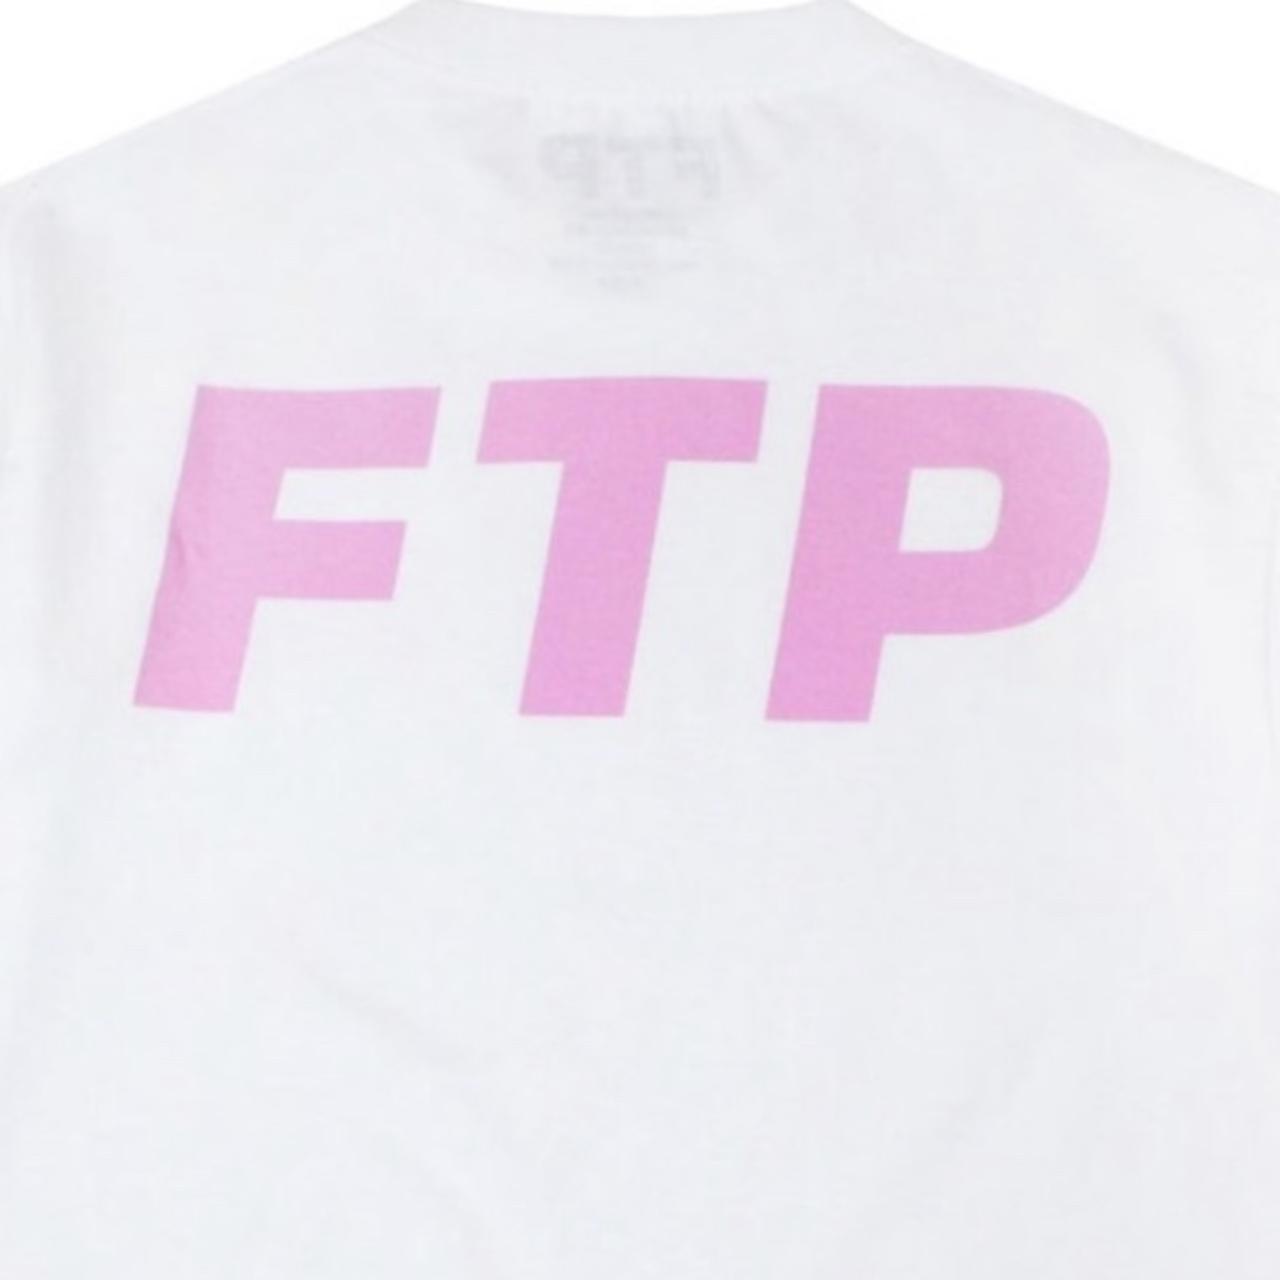 FTP breast cancer logo tee, SIZE XL, DEADSTOCK still...